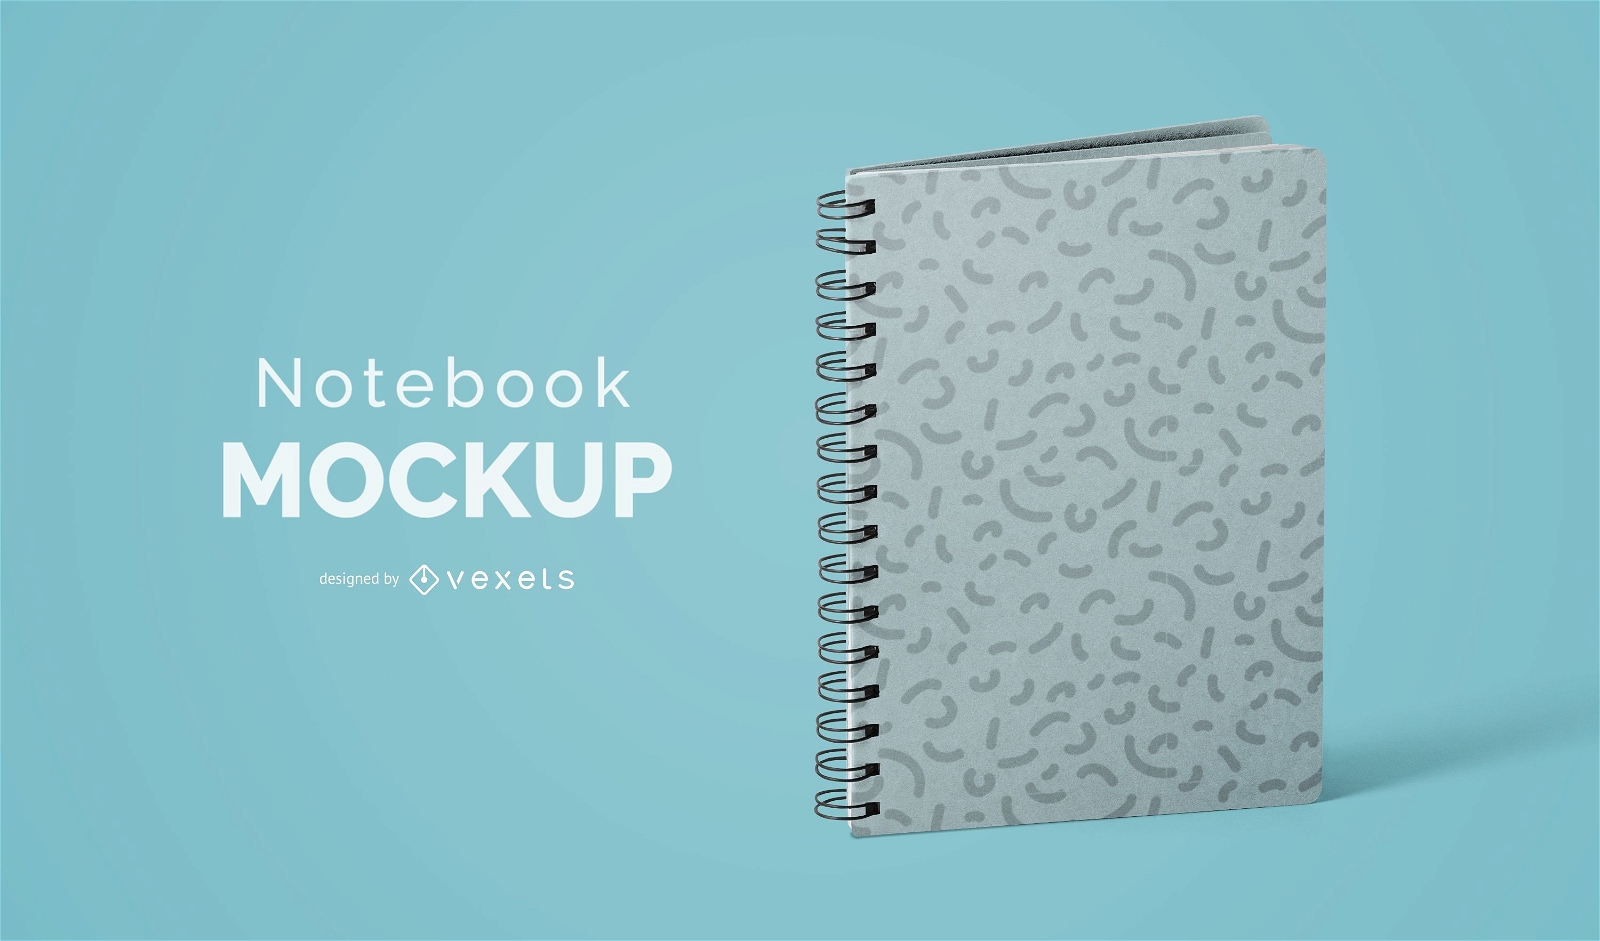 Notebook mockup psd design